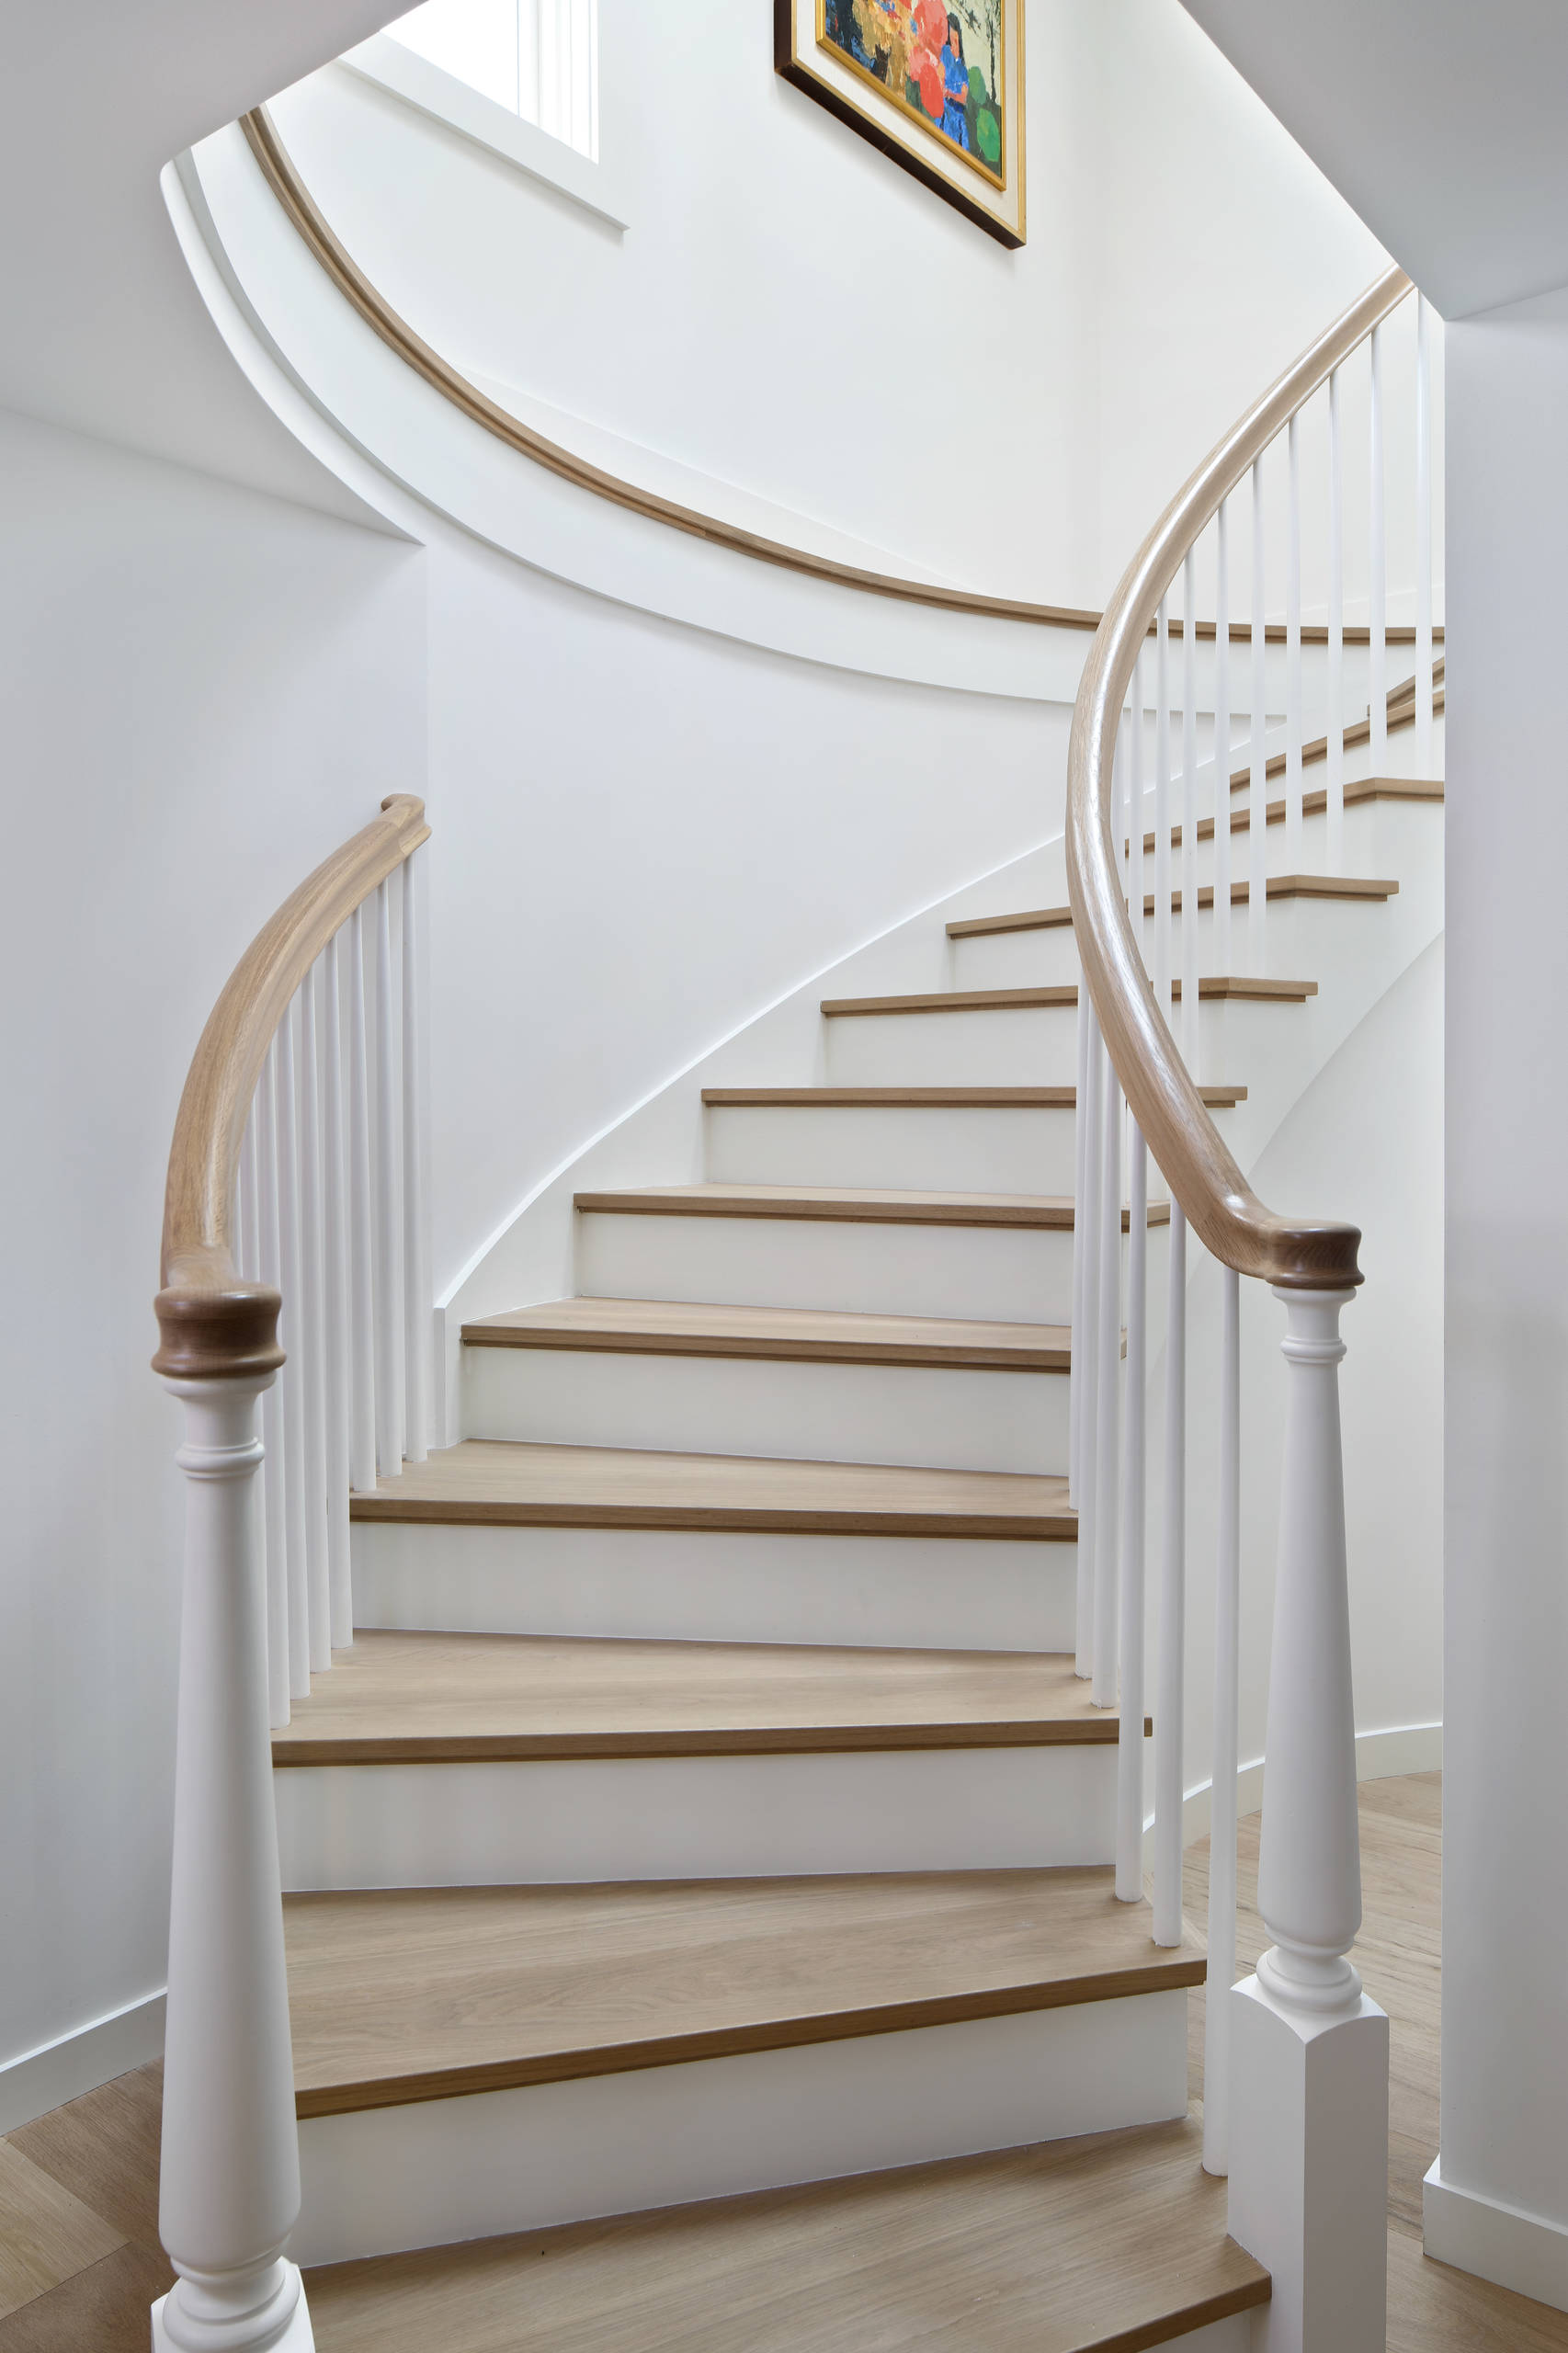 El Arroyo - curved staircase